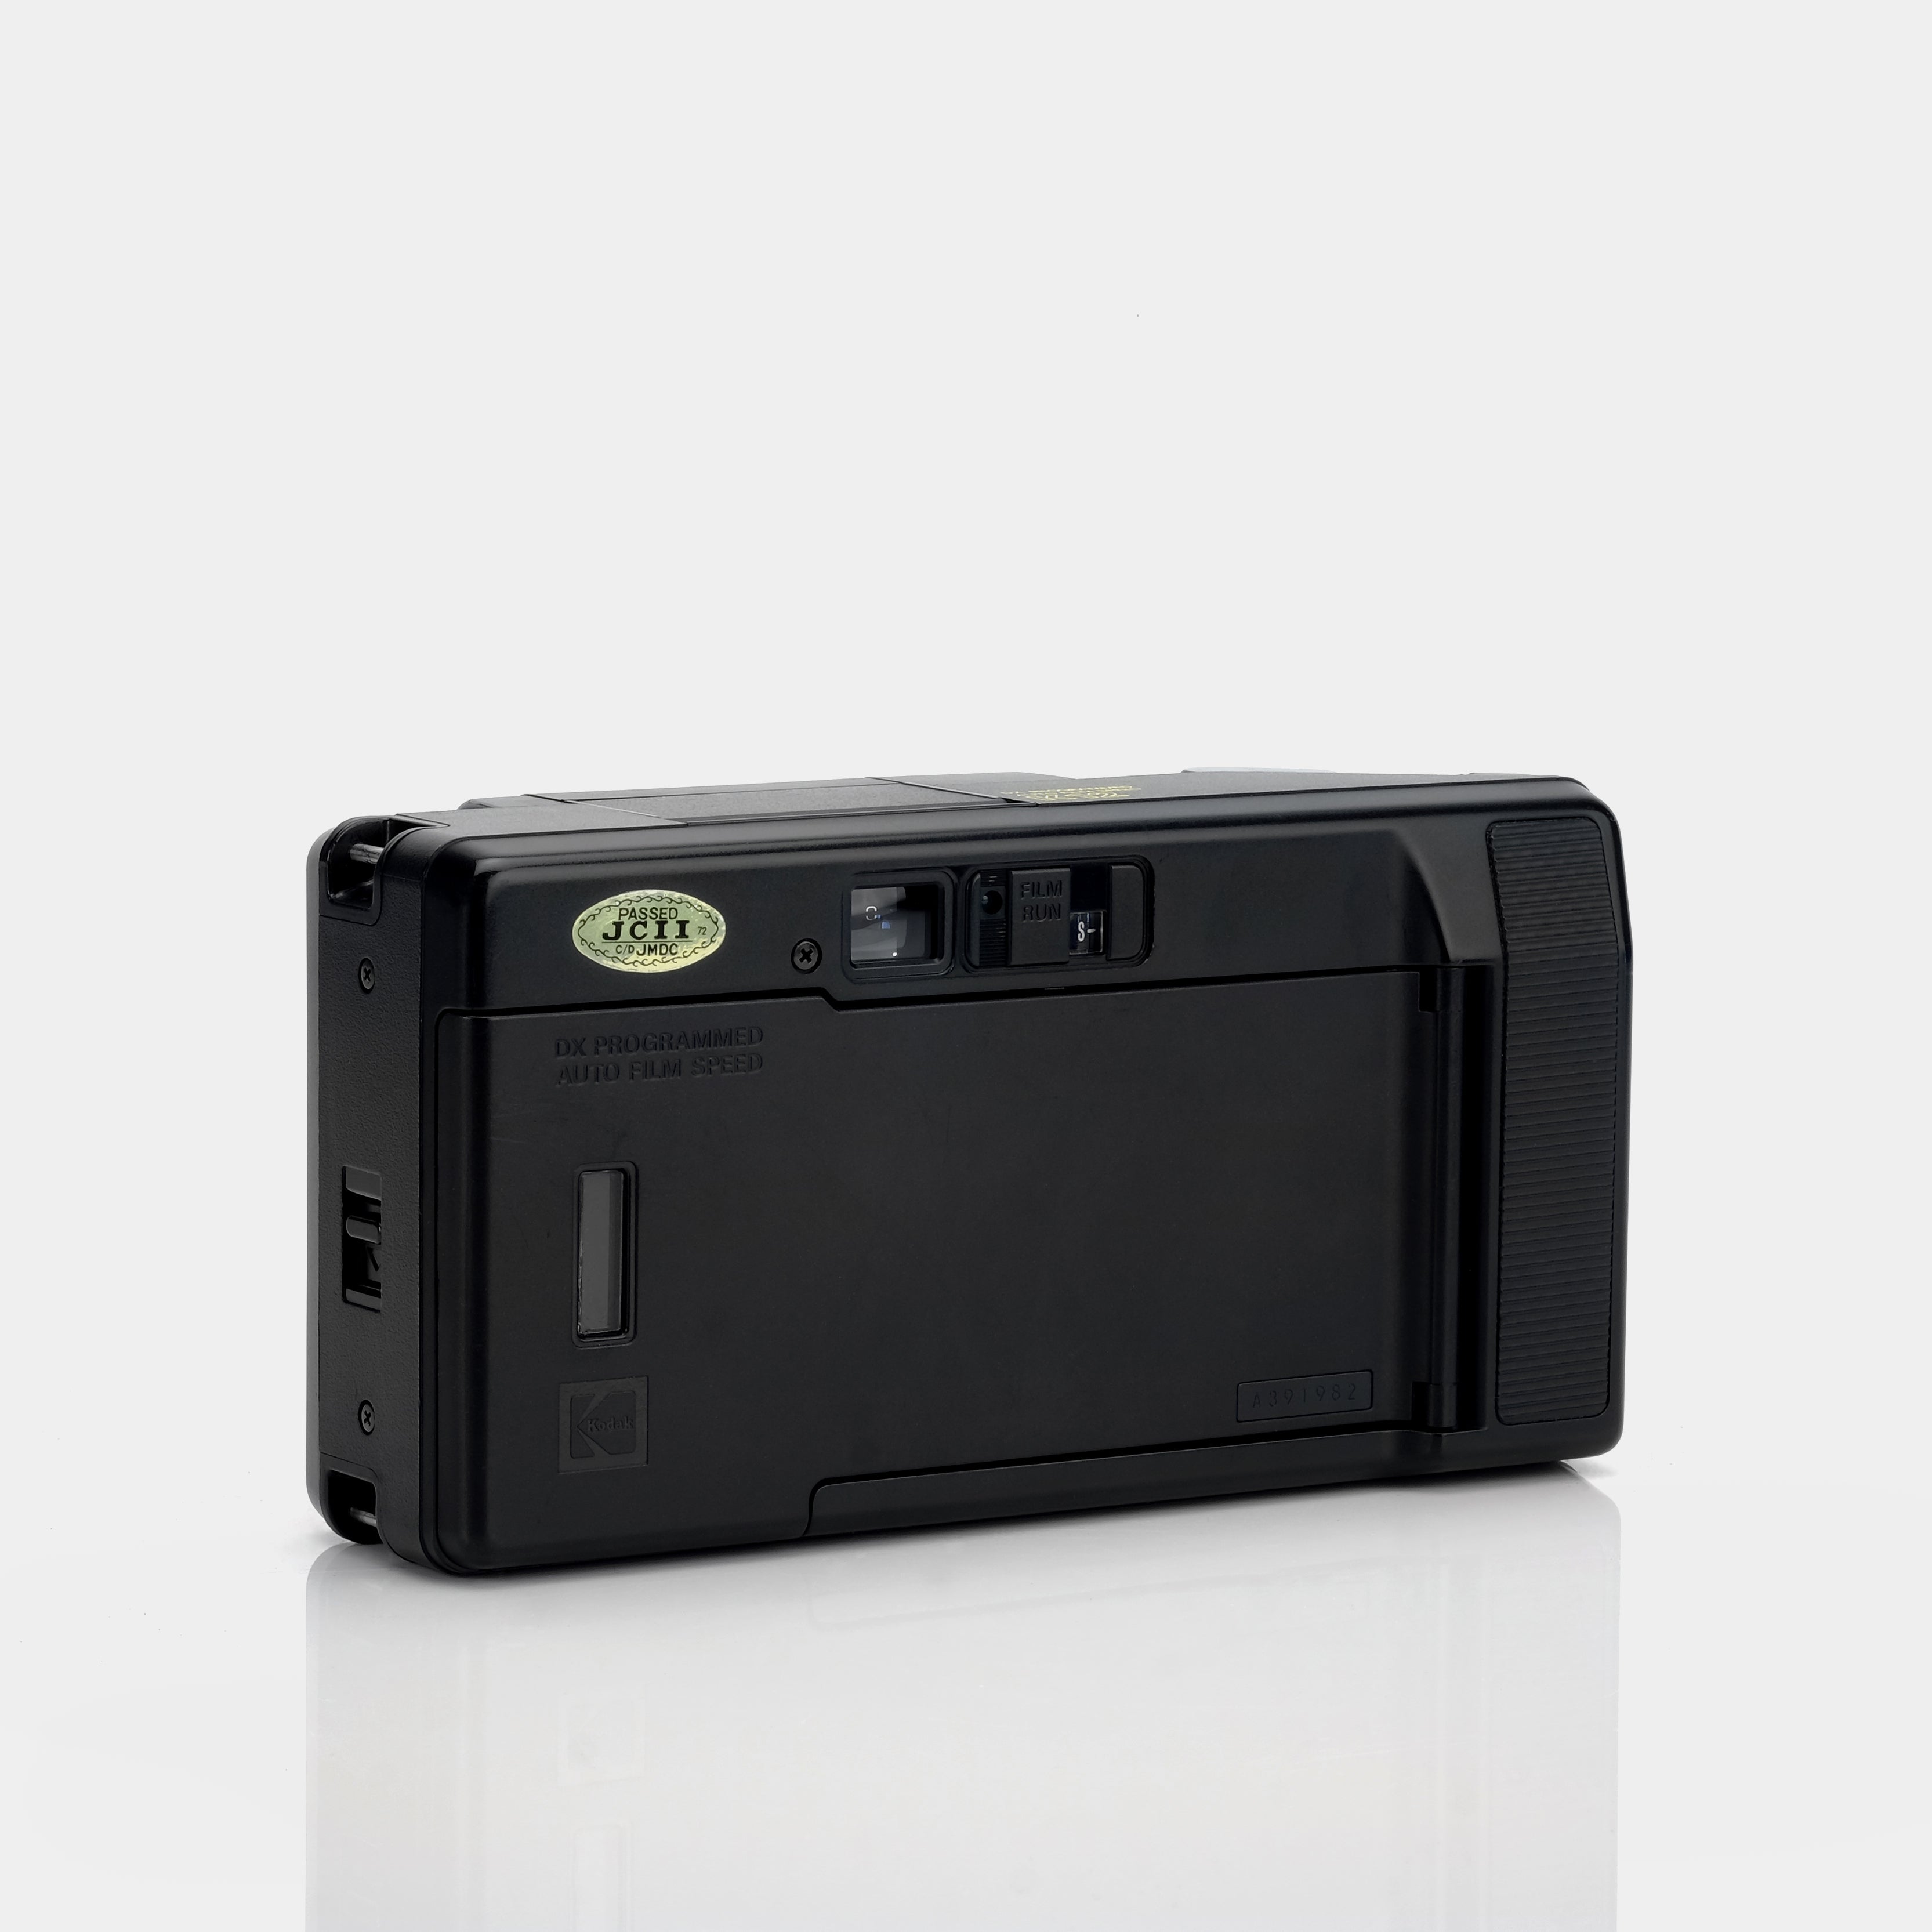 Kodak VR-35 K12 Ektar 35mm Point and Shoot Film Camera